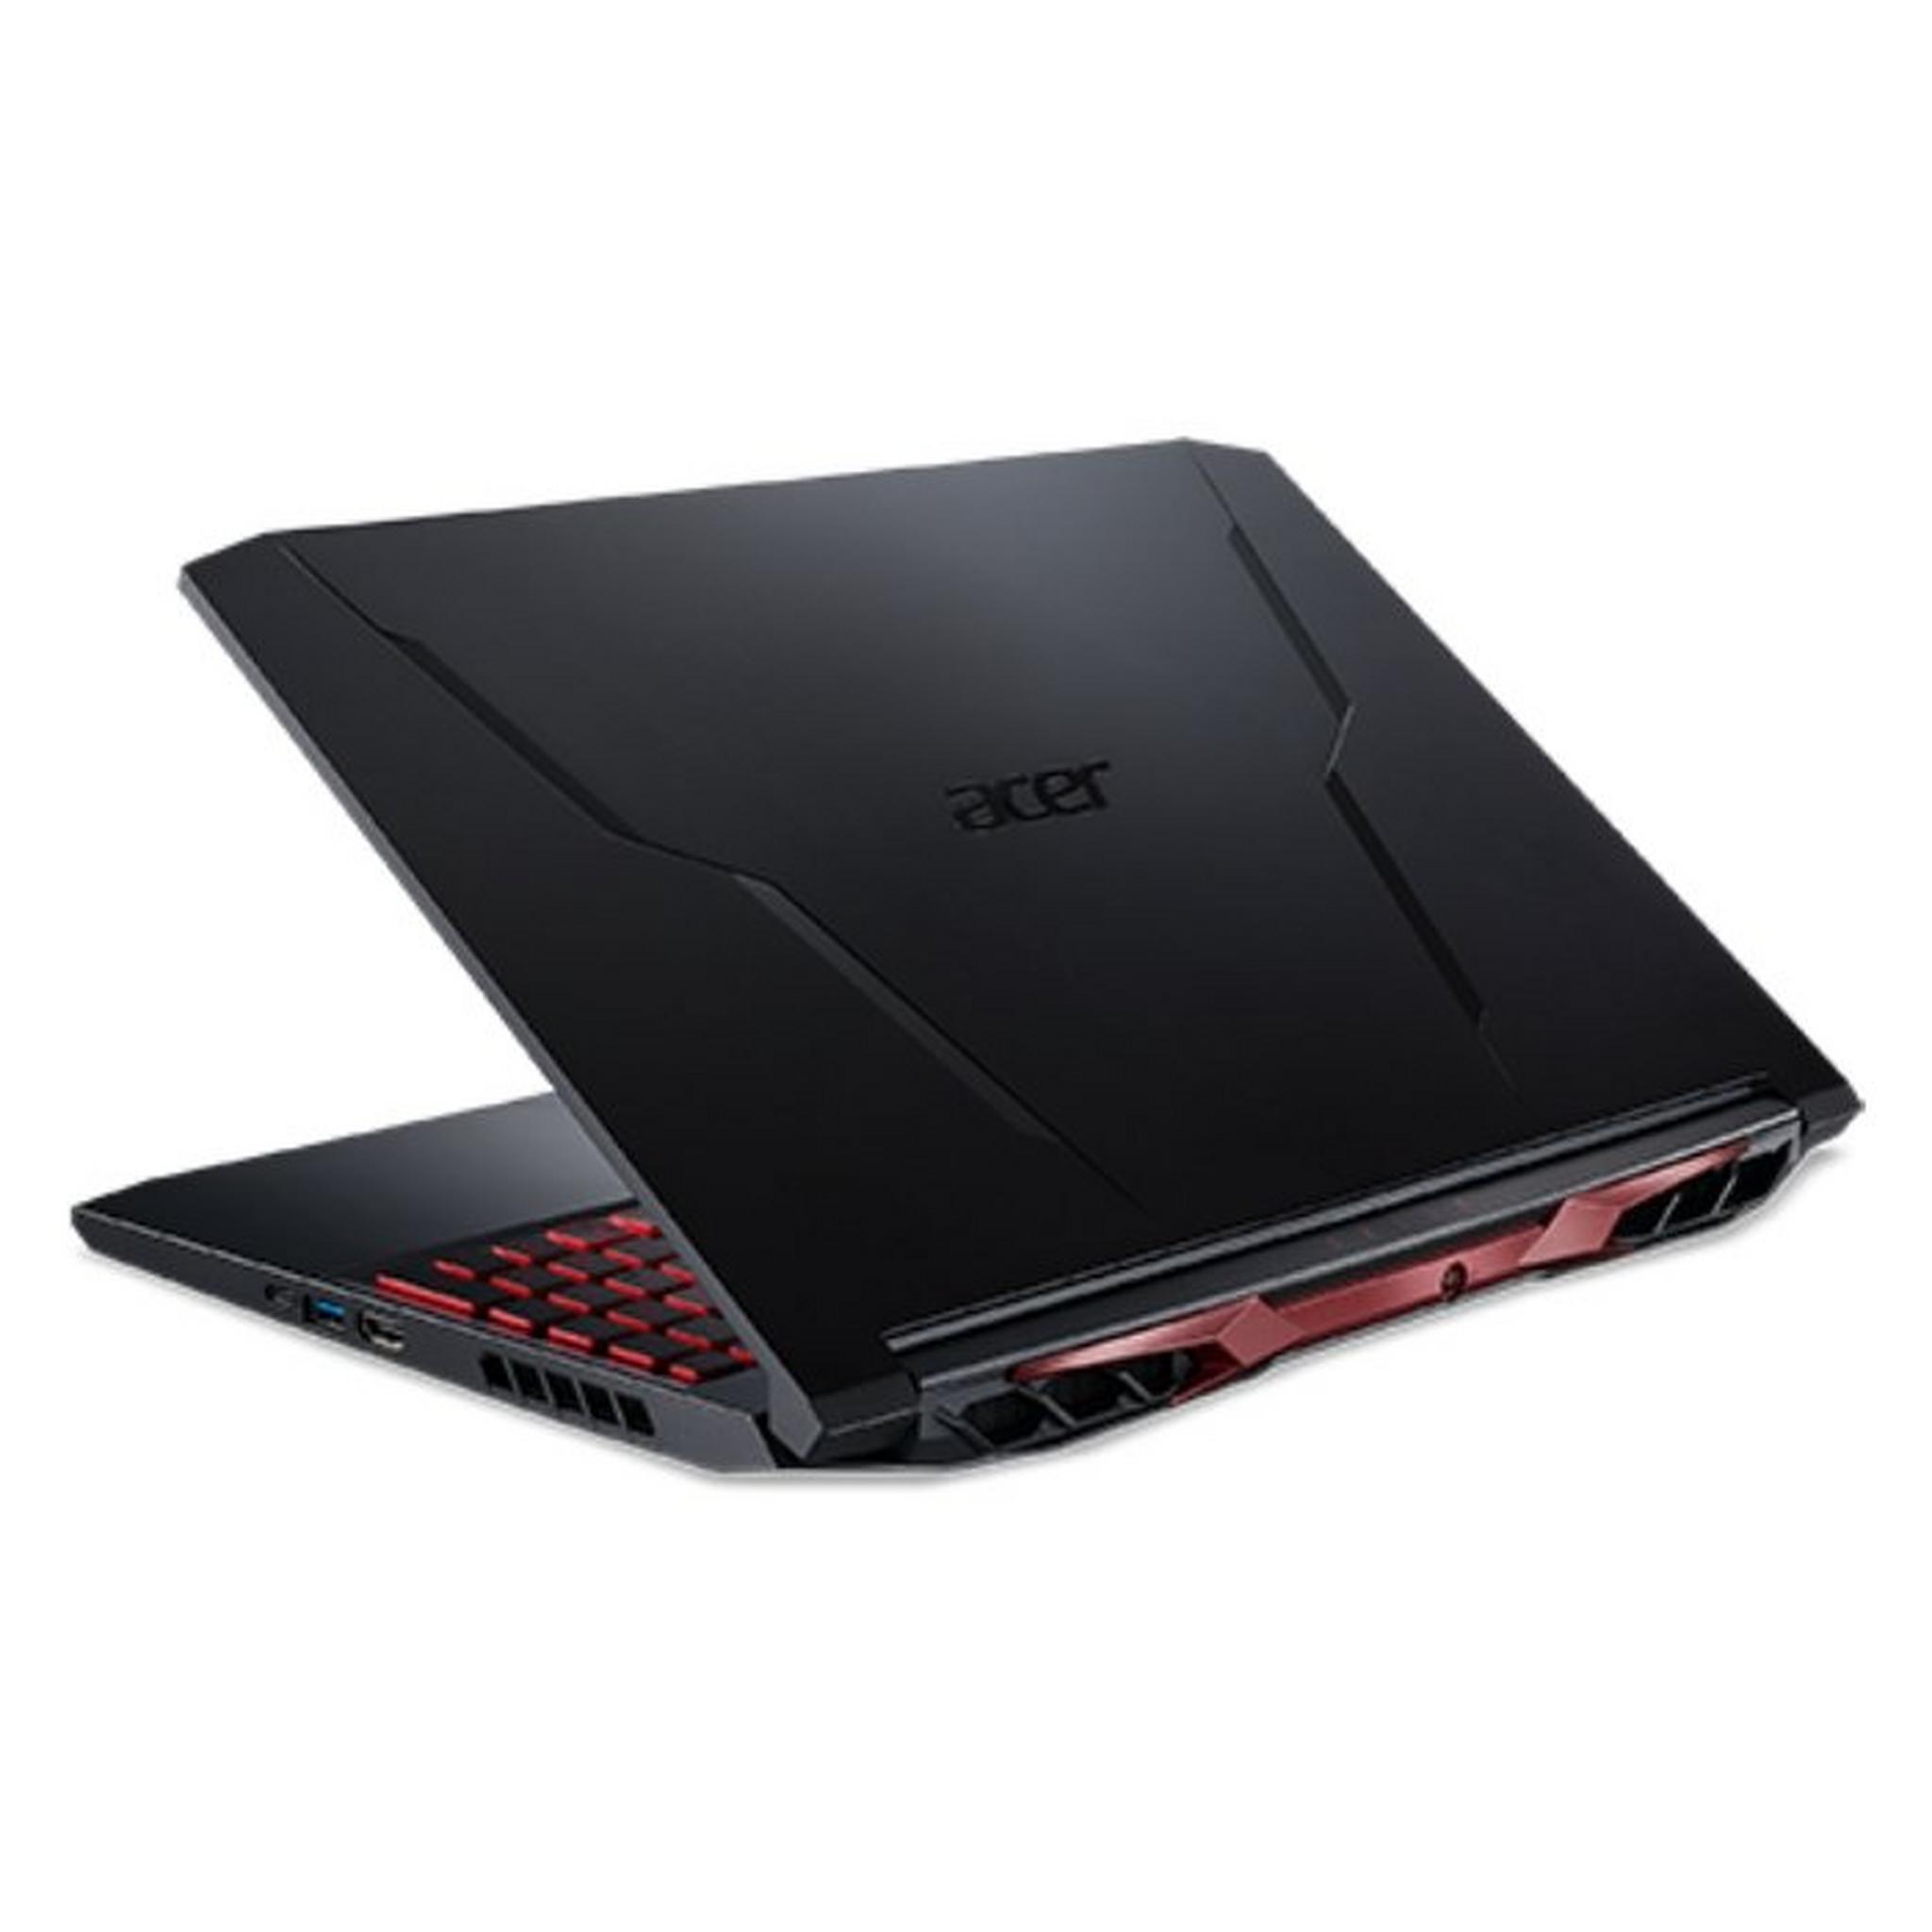 Acer Nitro 5 Intel Core i7 11th Gen, 16GB RAM, 1TB SSD, 15.6-inch Gaming Laptop